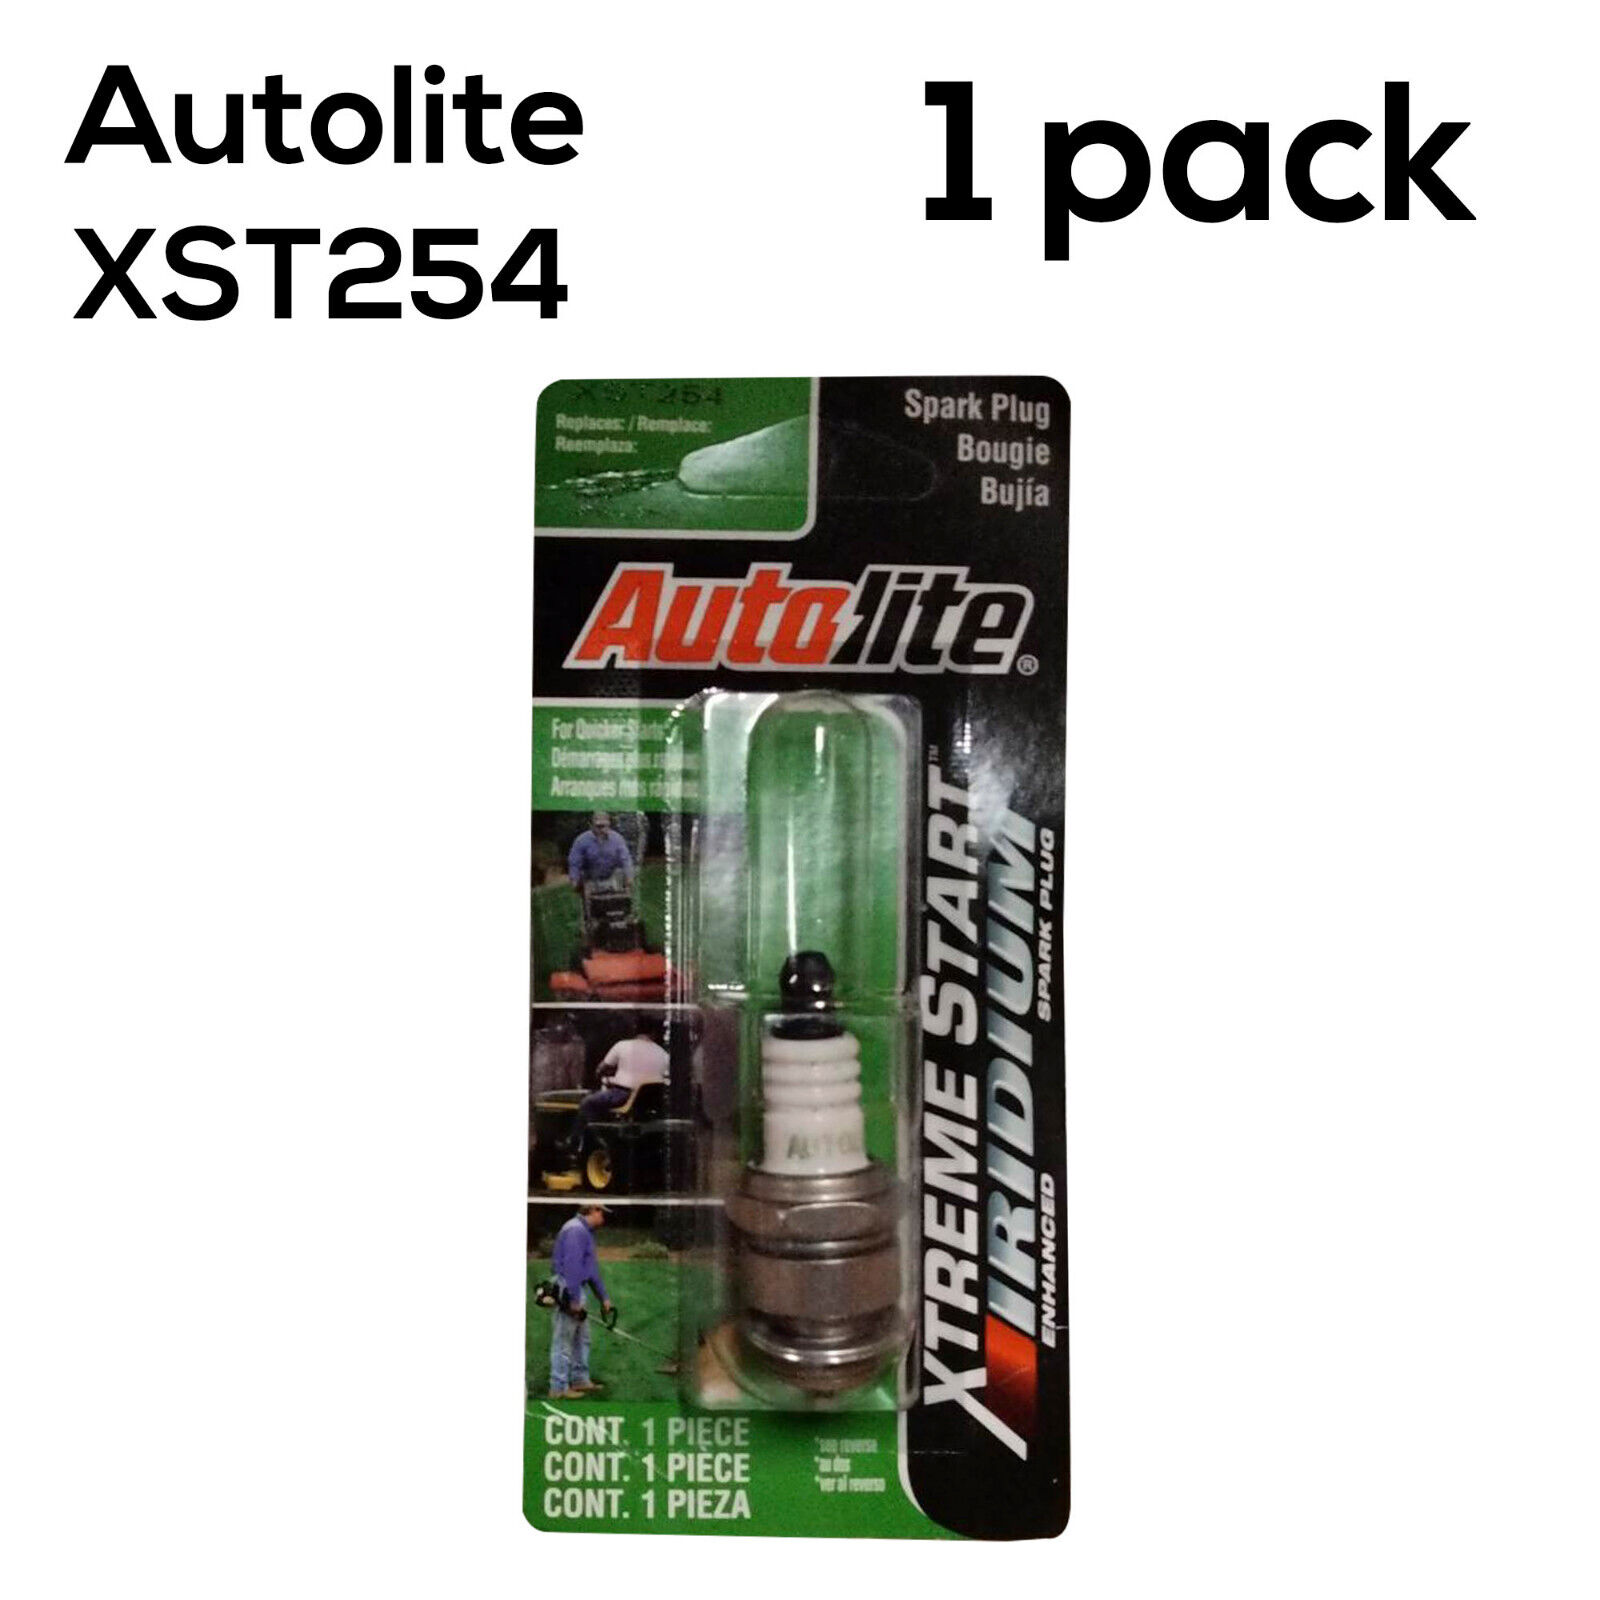 Autolite XST254 Xtreme Start Iridium Spark Plug Lawn and Garden - Display Pack